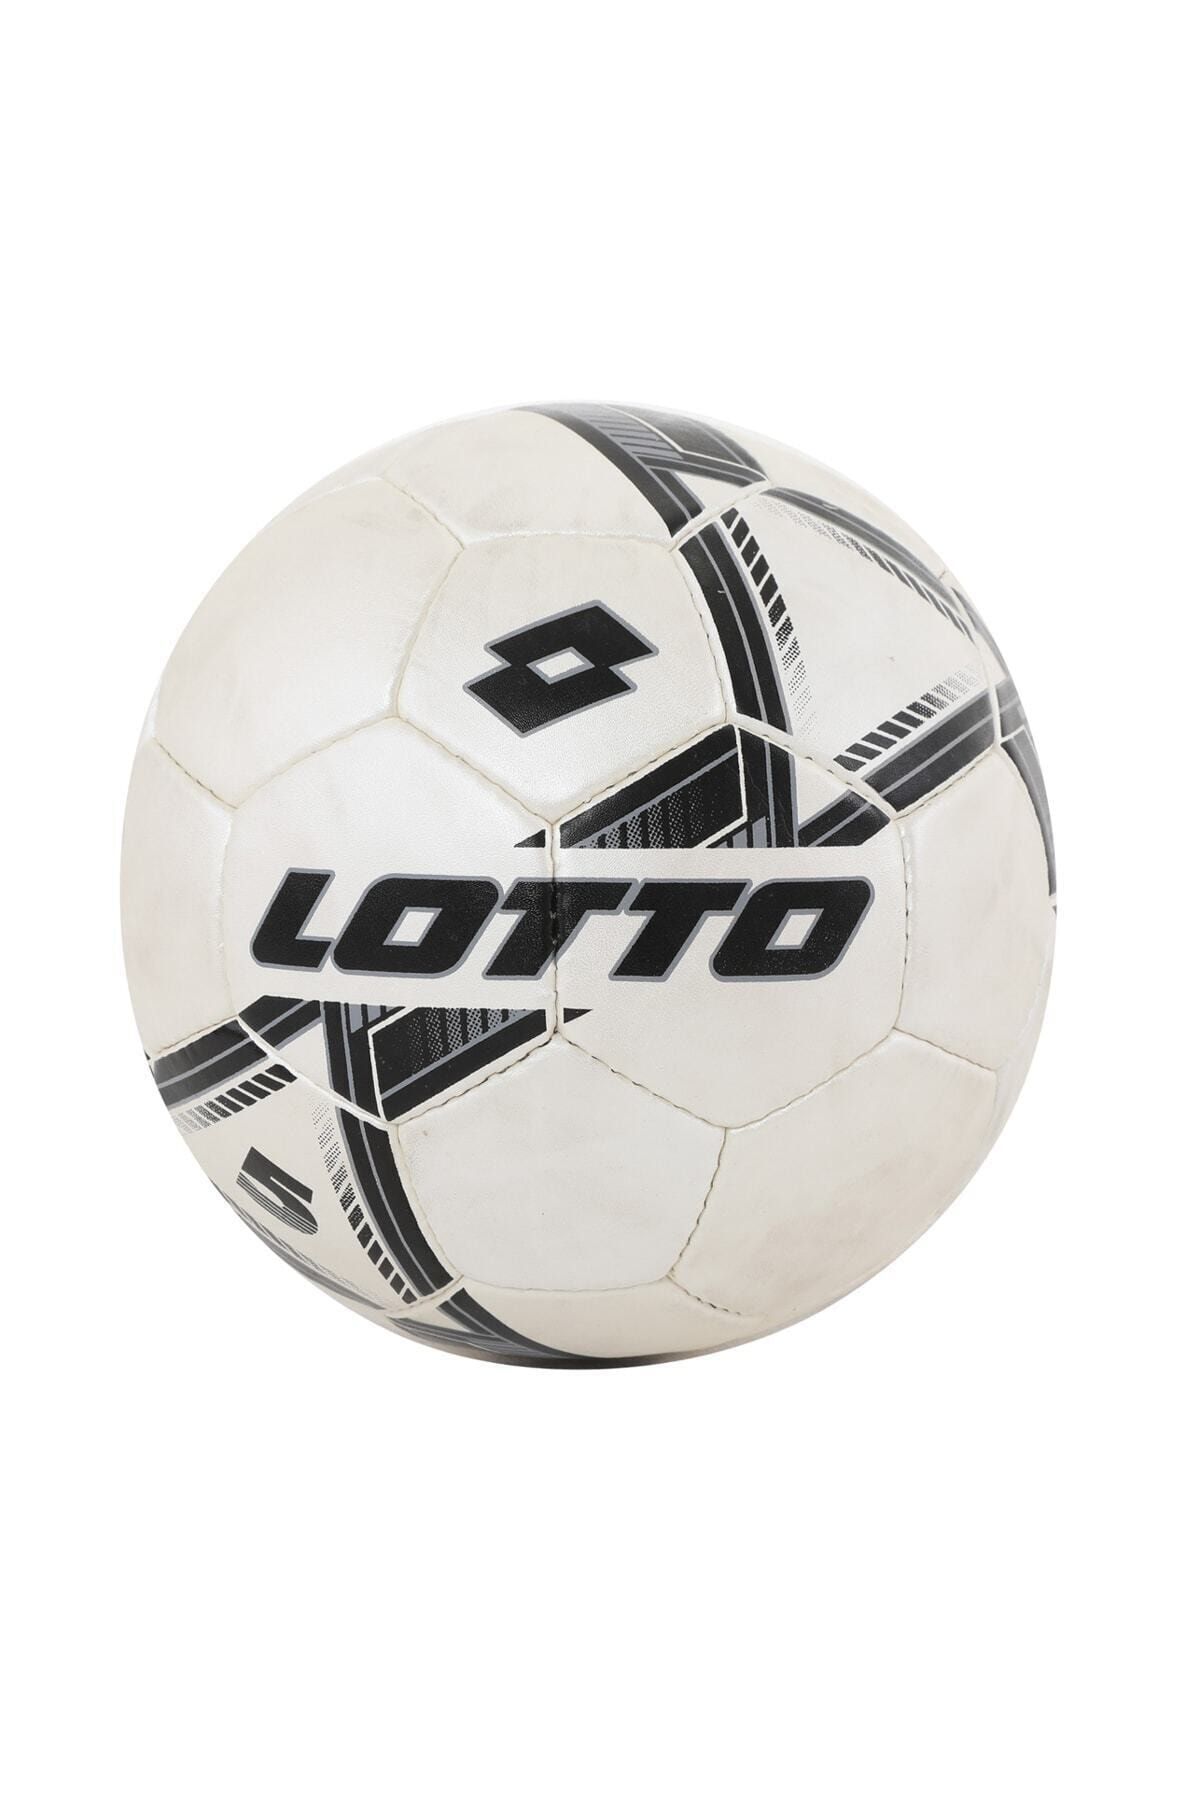 Lotto Beyaz Orta Sert Futbol Topu